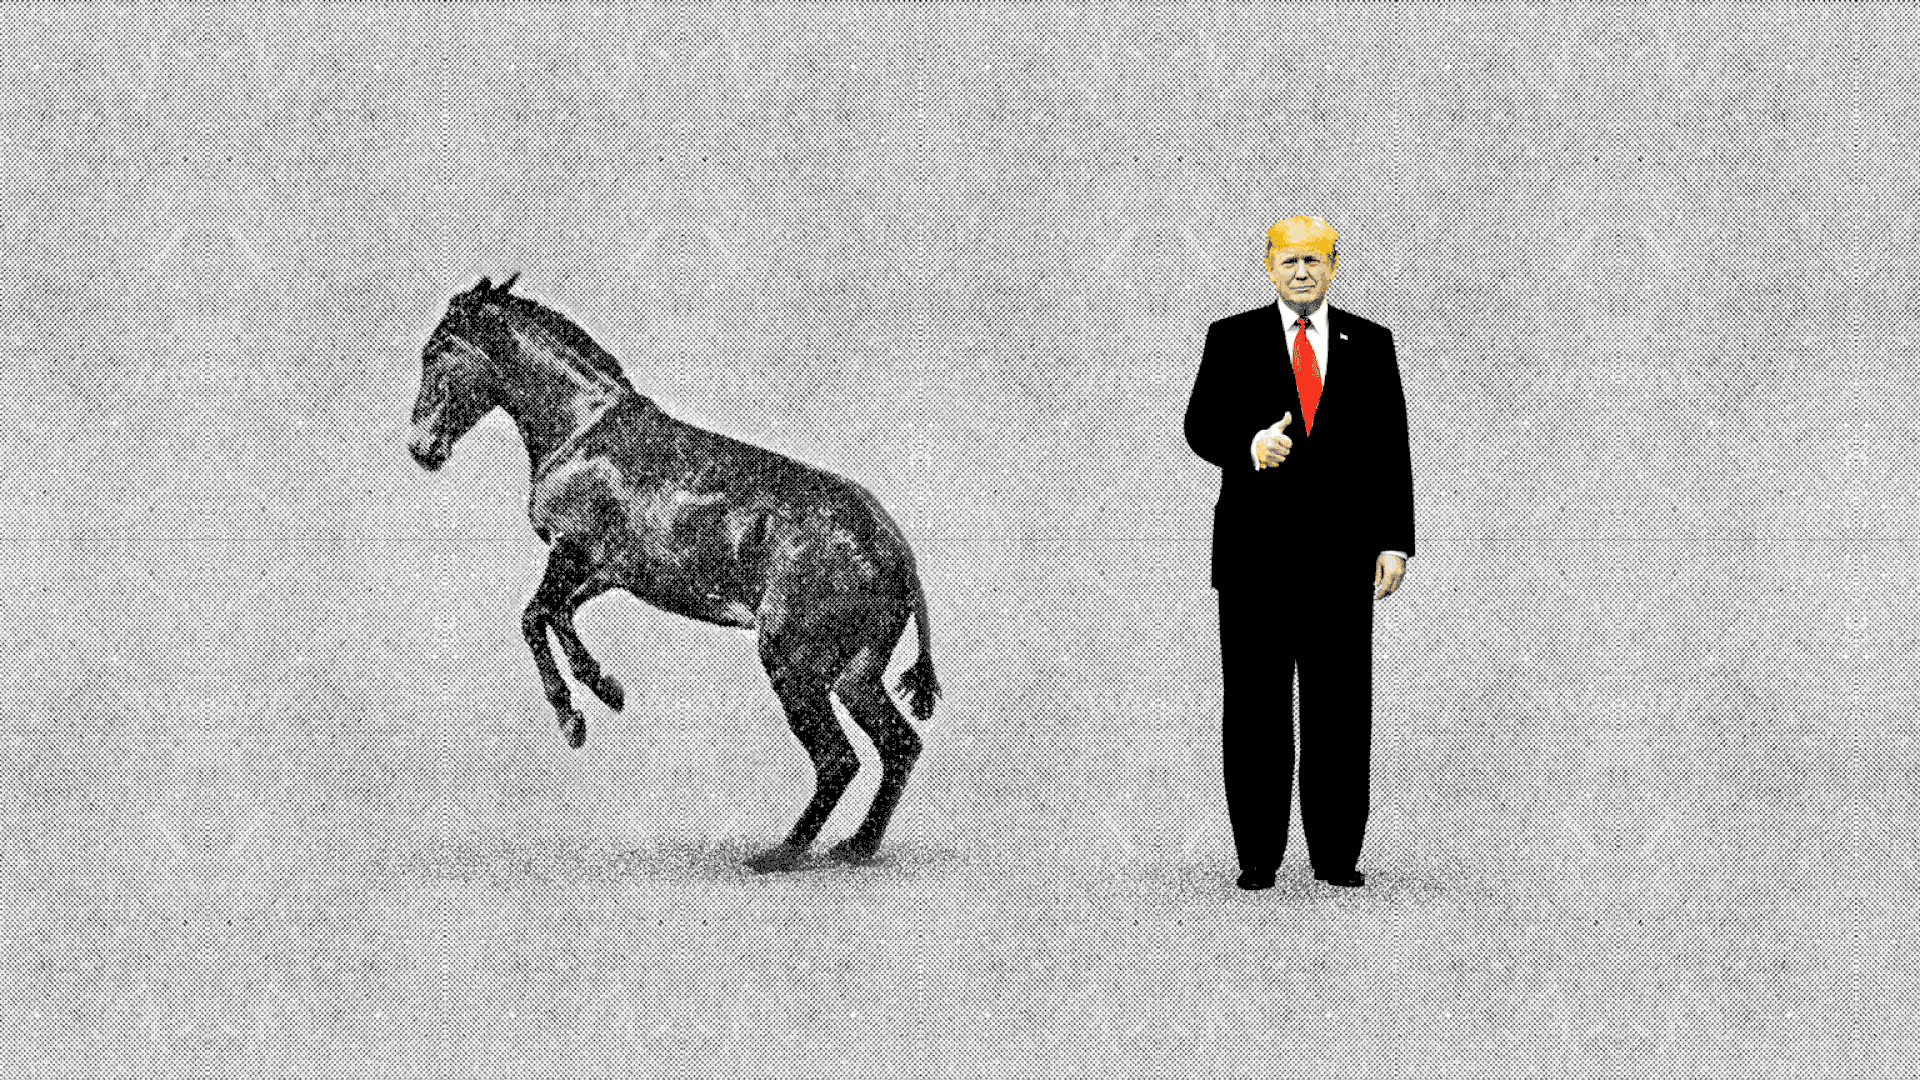 Donkey kicking Trump